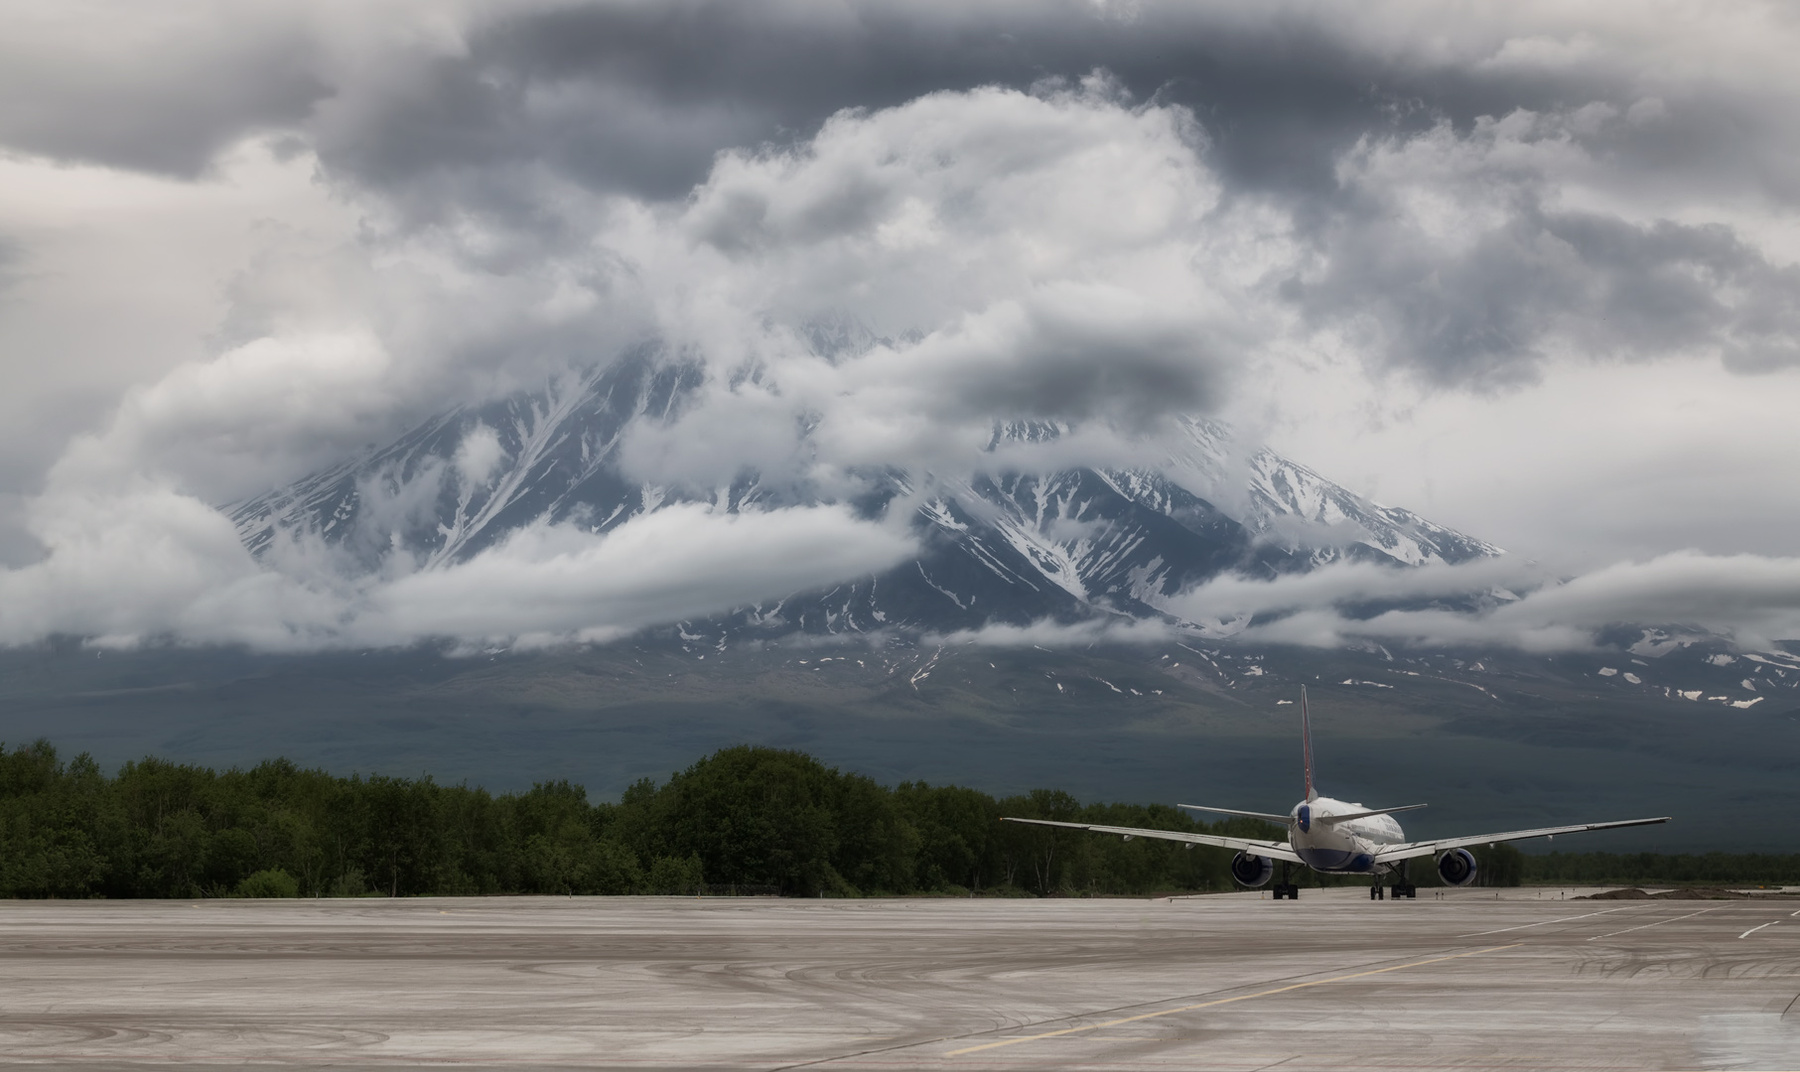 на взлёте вулкан Камчатка лето самолет тучи аэропорт Елизово